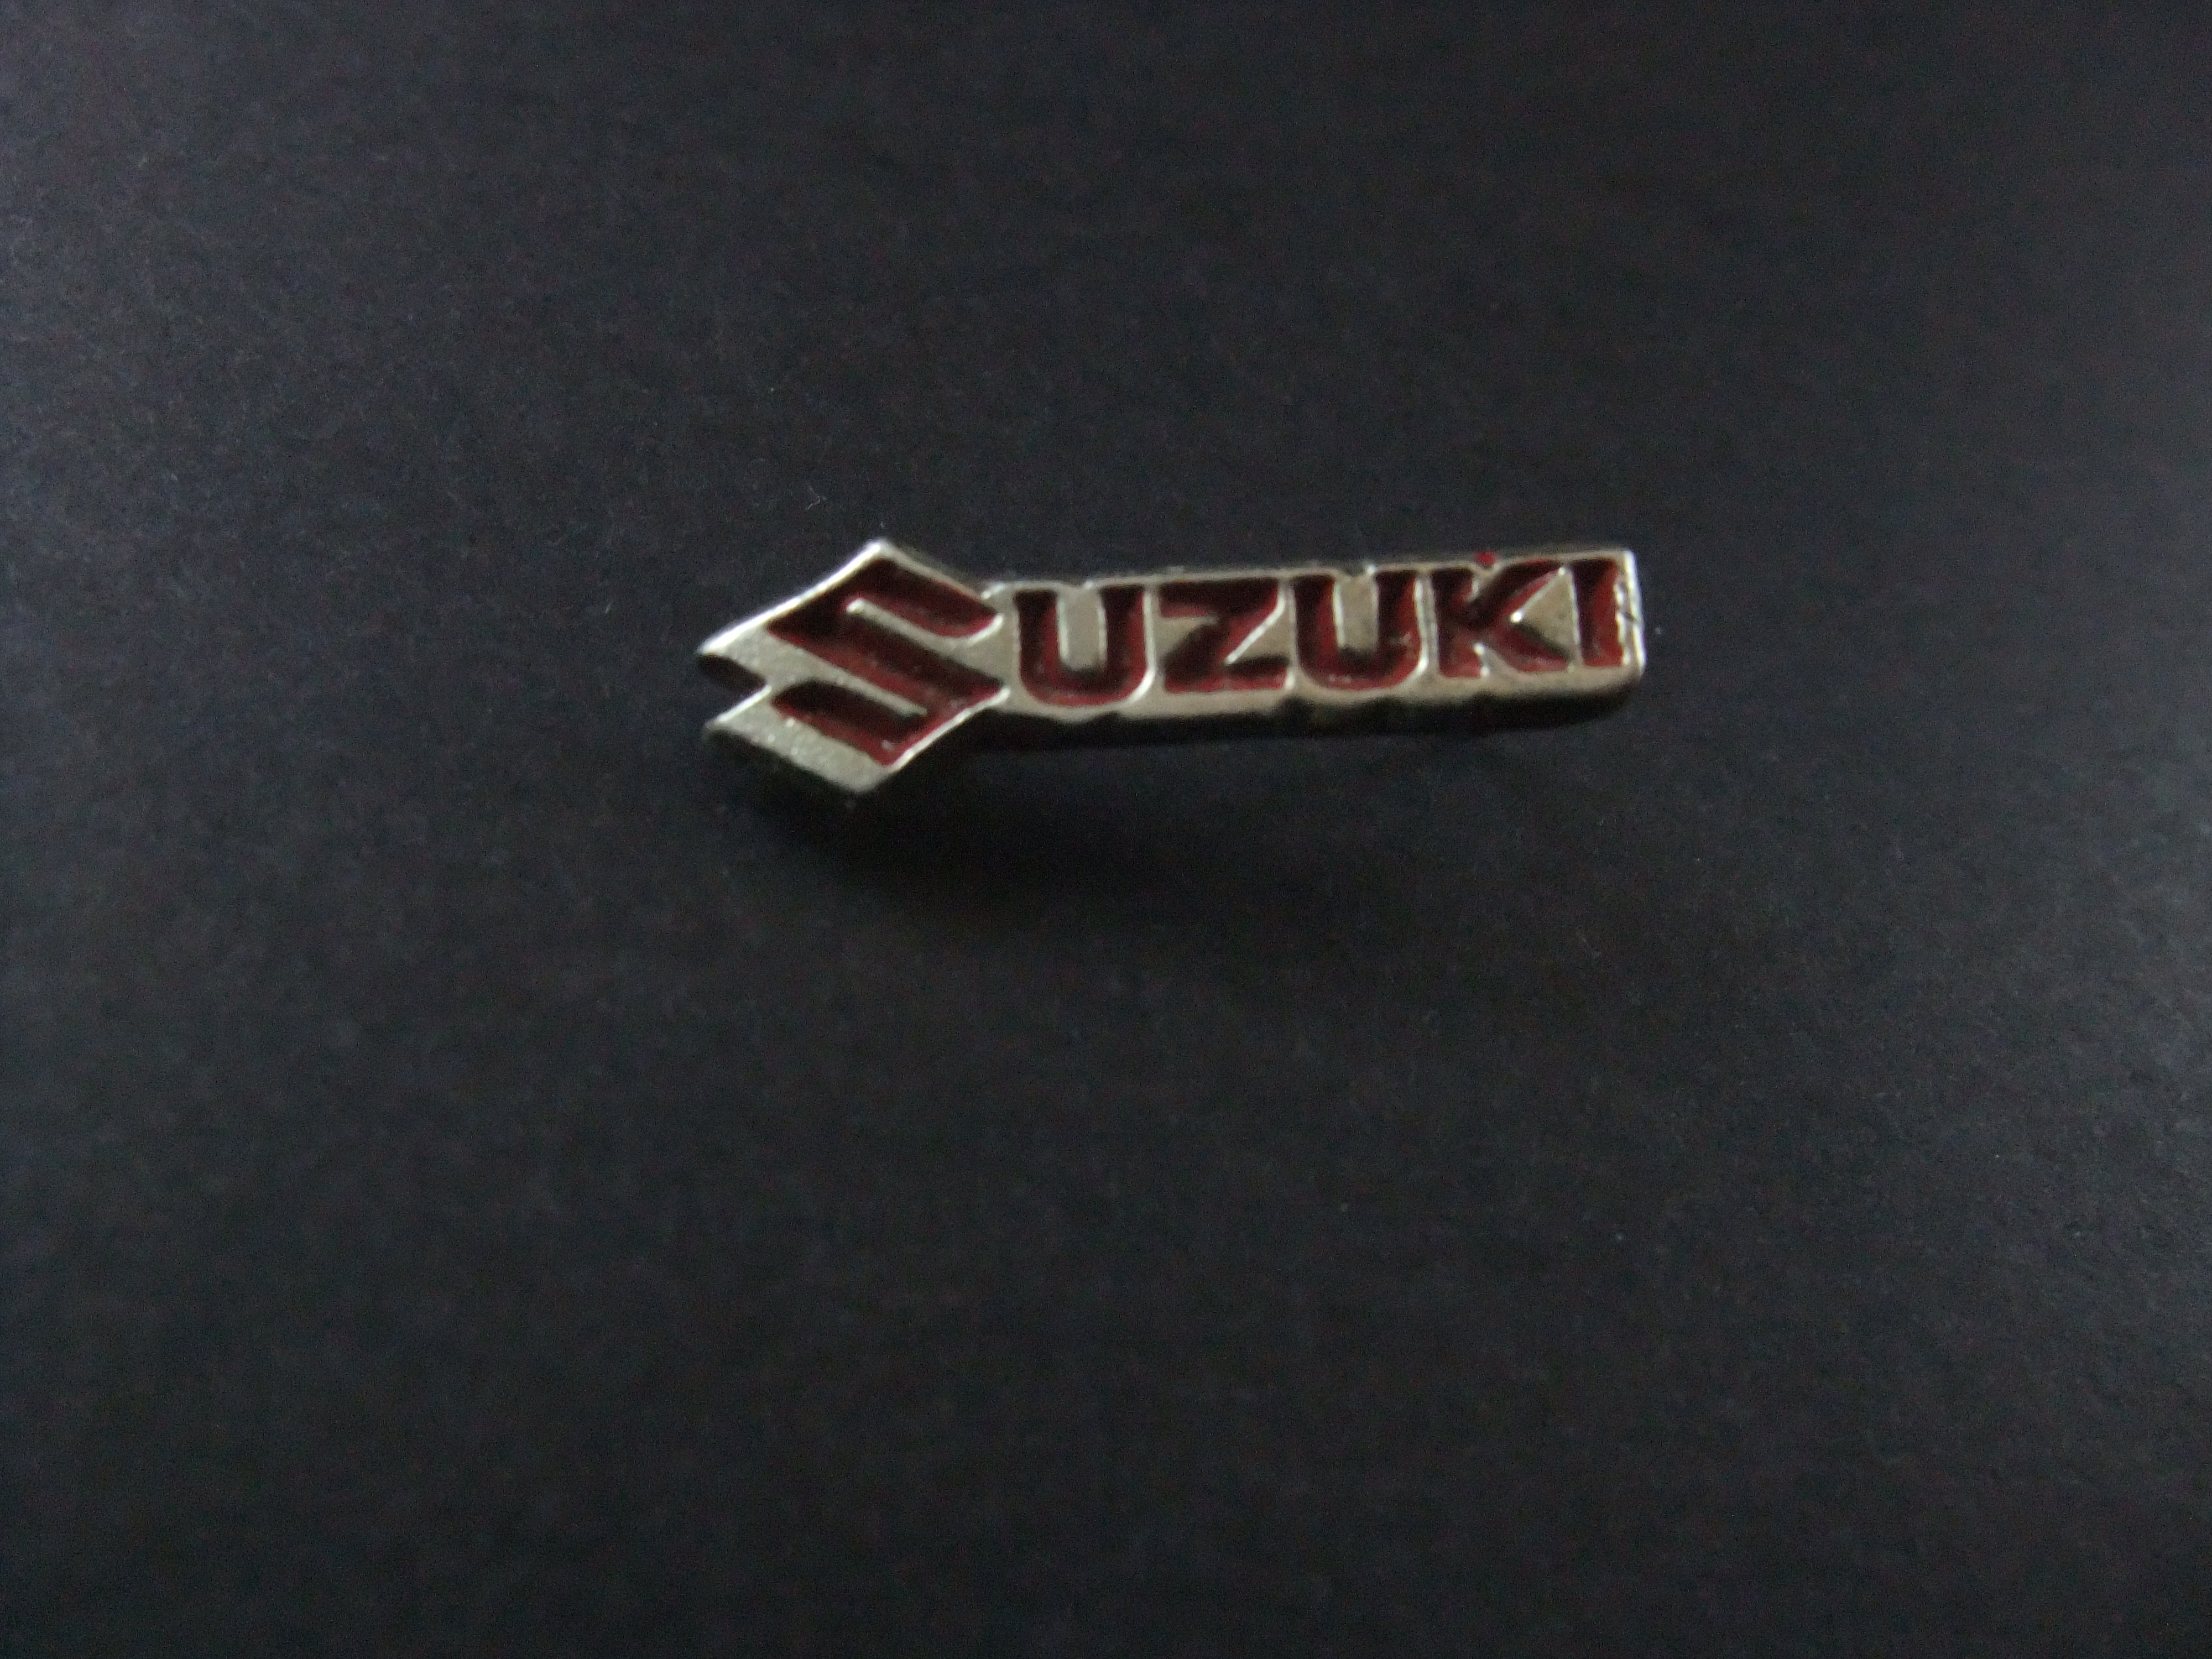 Suzuki, auto-motor logo